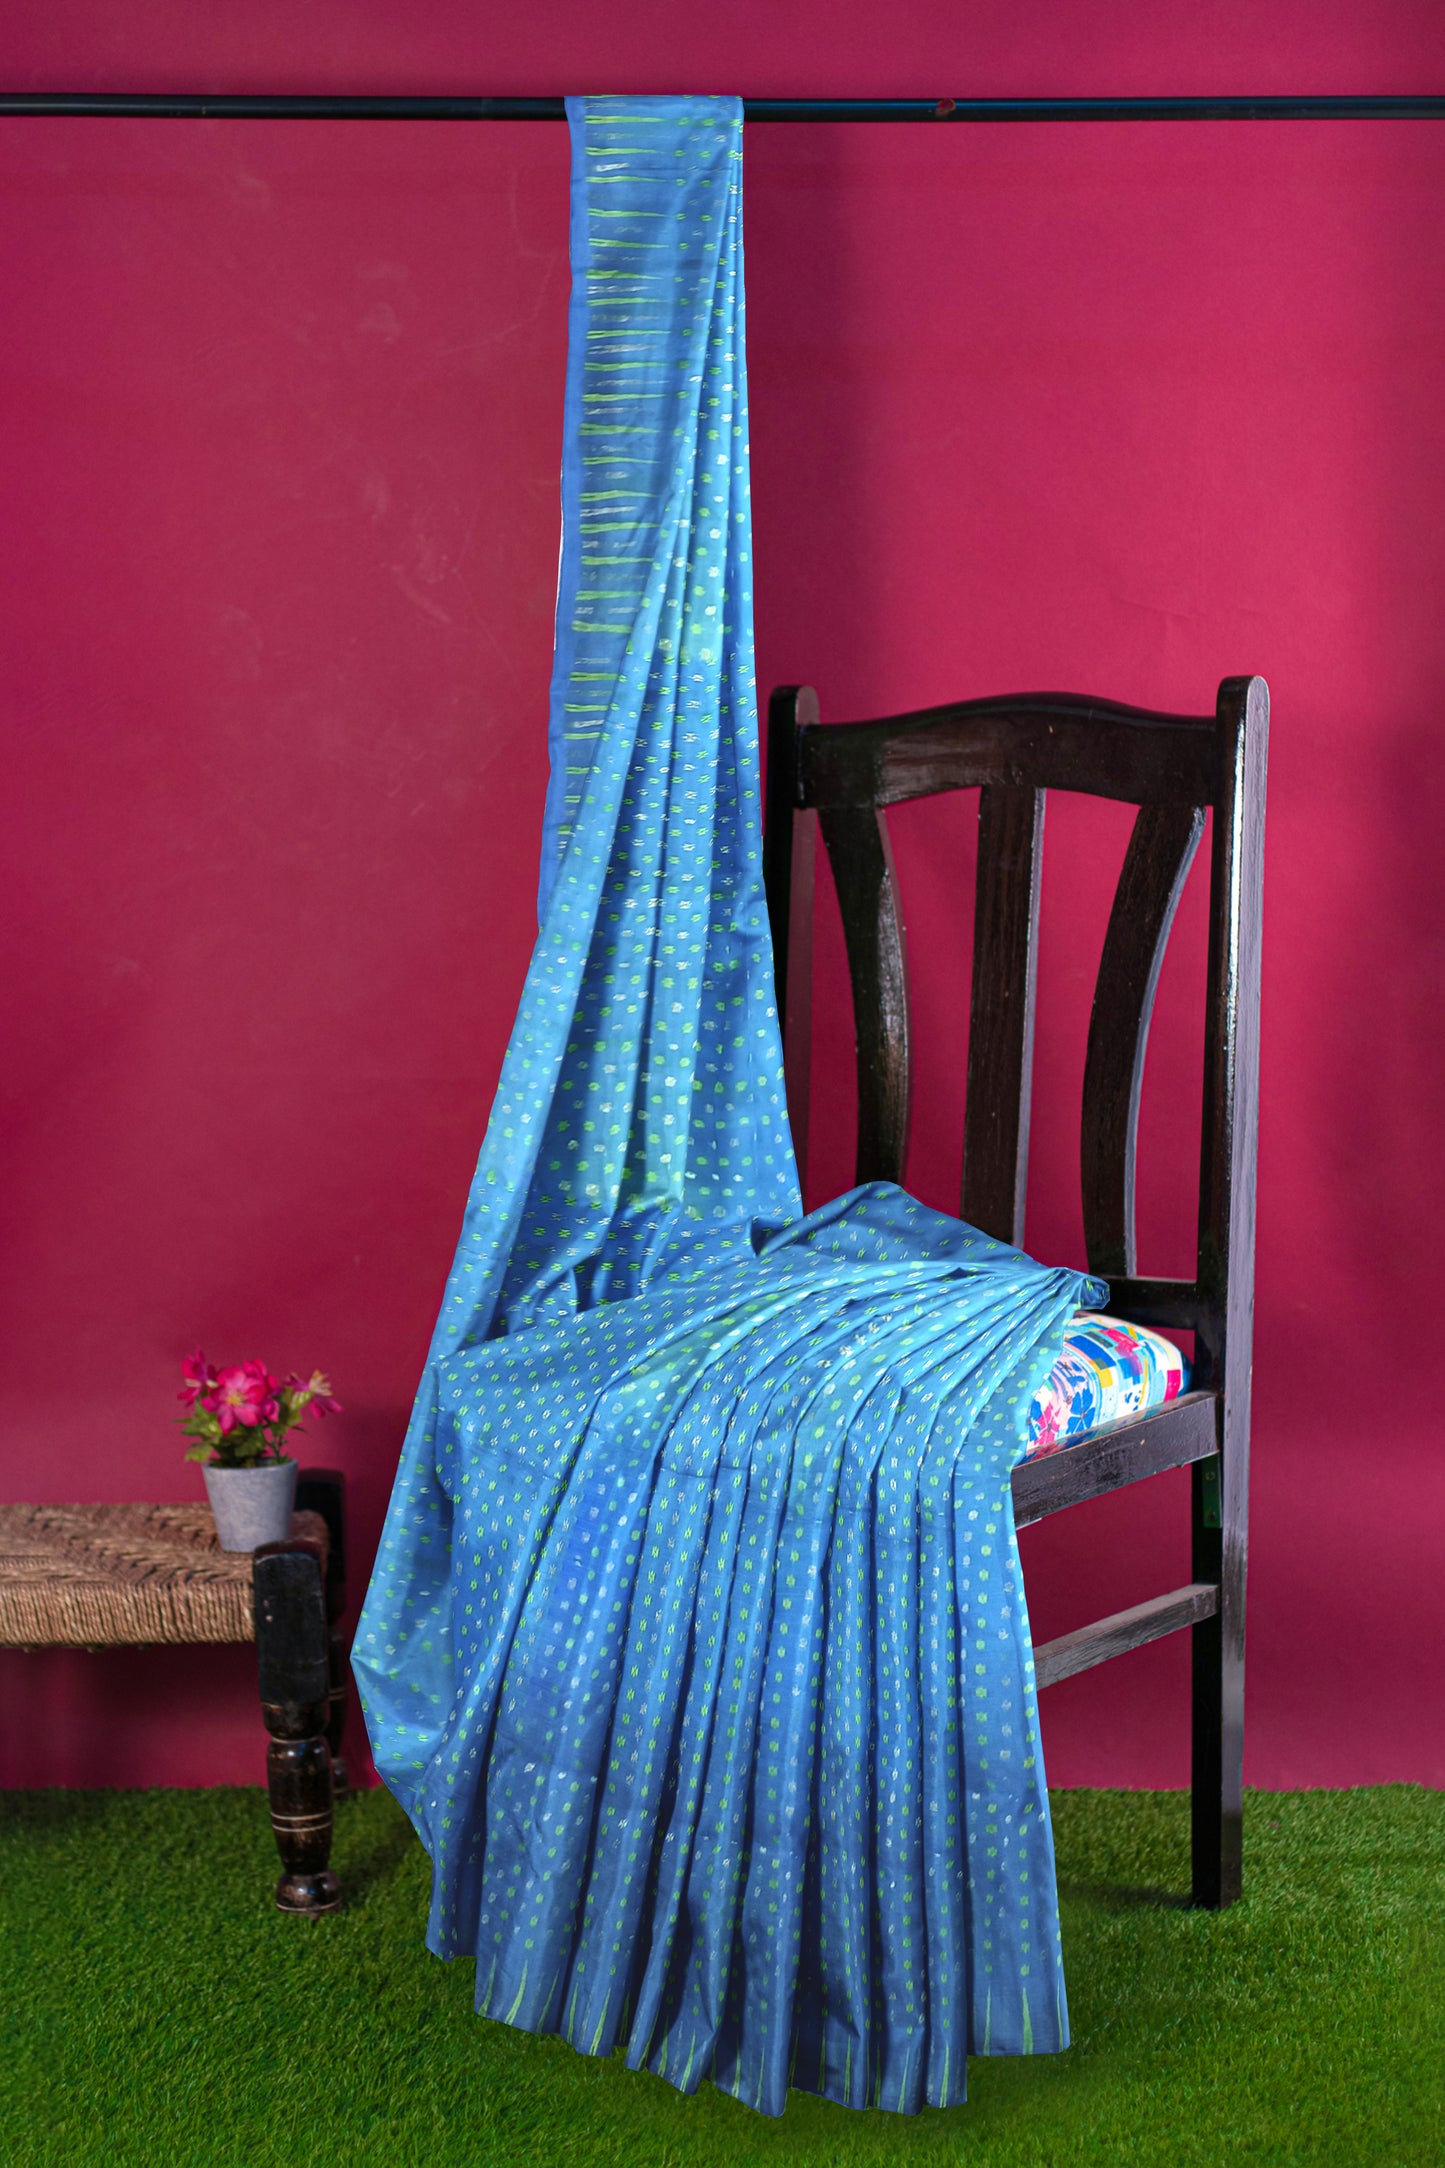 Pradip Fabrics Ethnic Women's Tant Jamdani Light Blue Color Saree